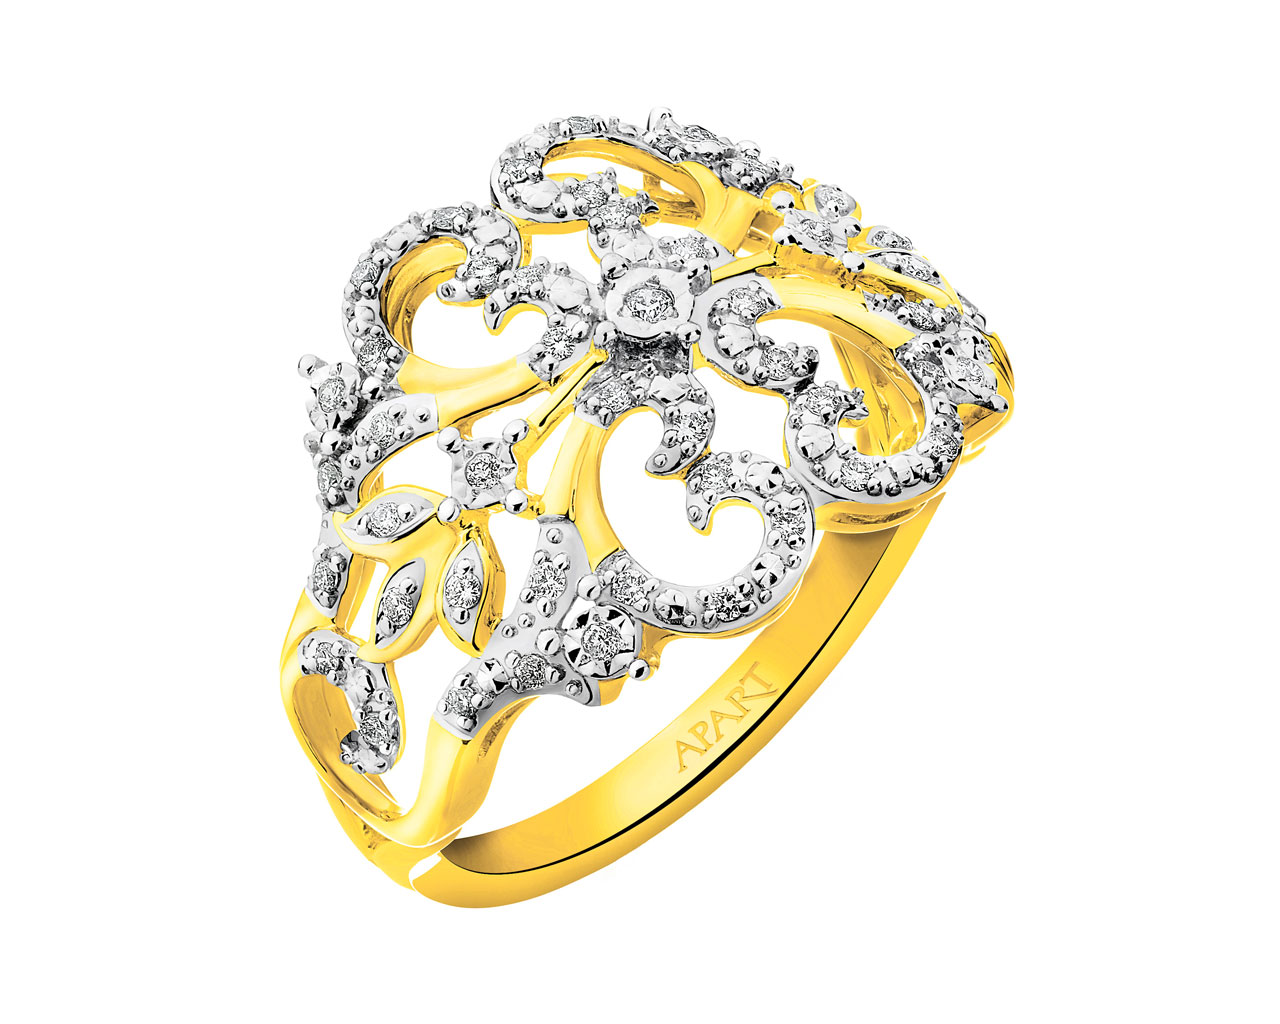 Zlatý prsten s brilianty 0,20 ct - ryzost 585